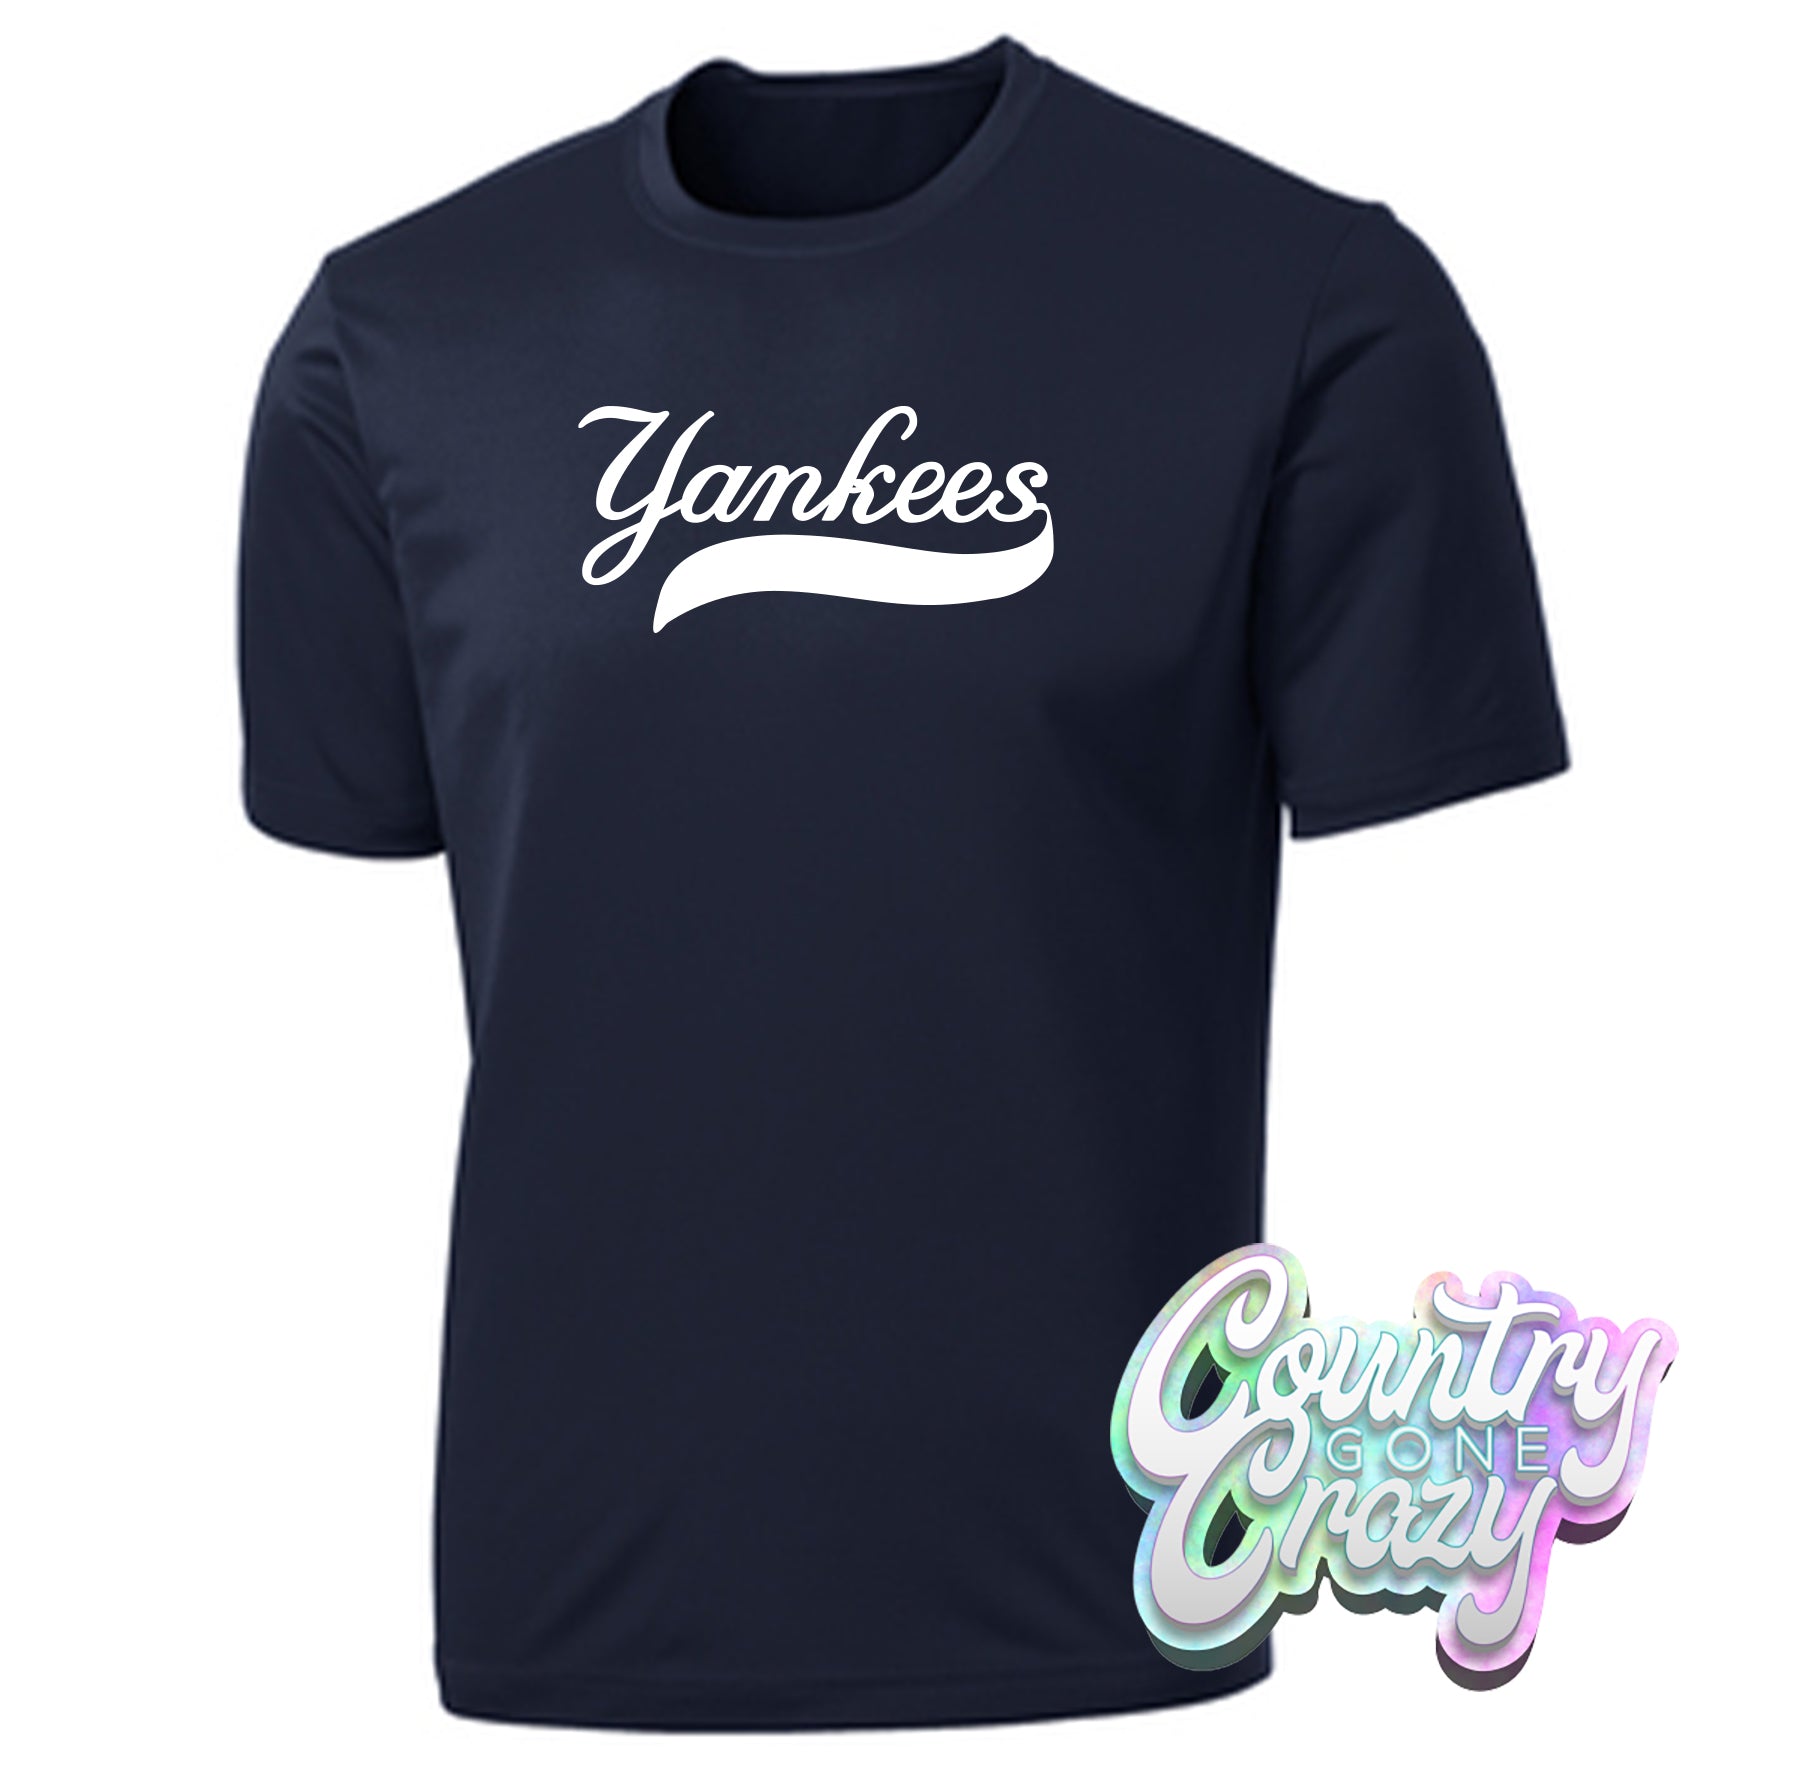 New York Black Yankees - Unisex T-Shirt Sport Grey / Adult 2x / T-Shirt